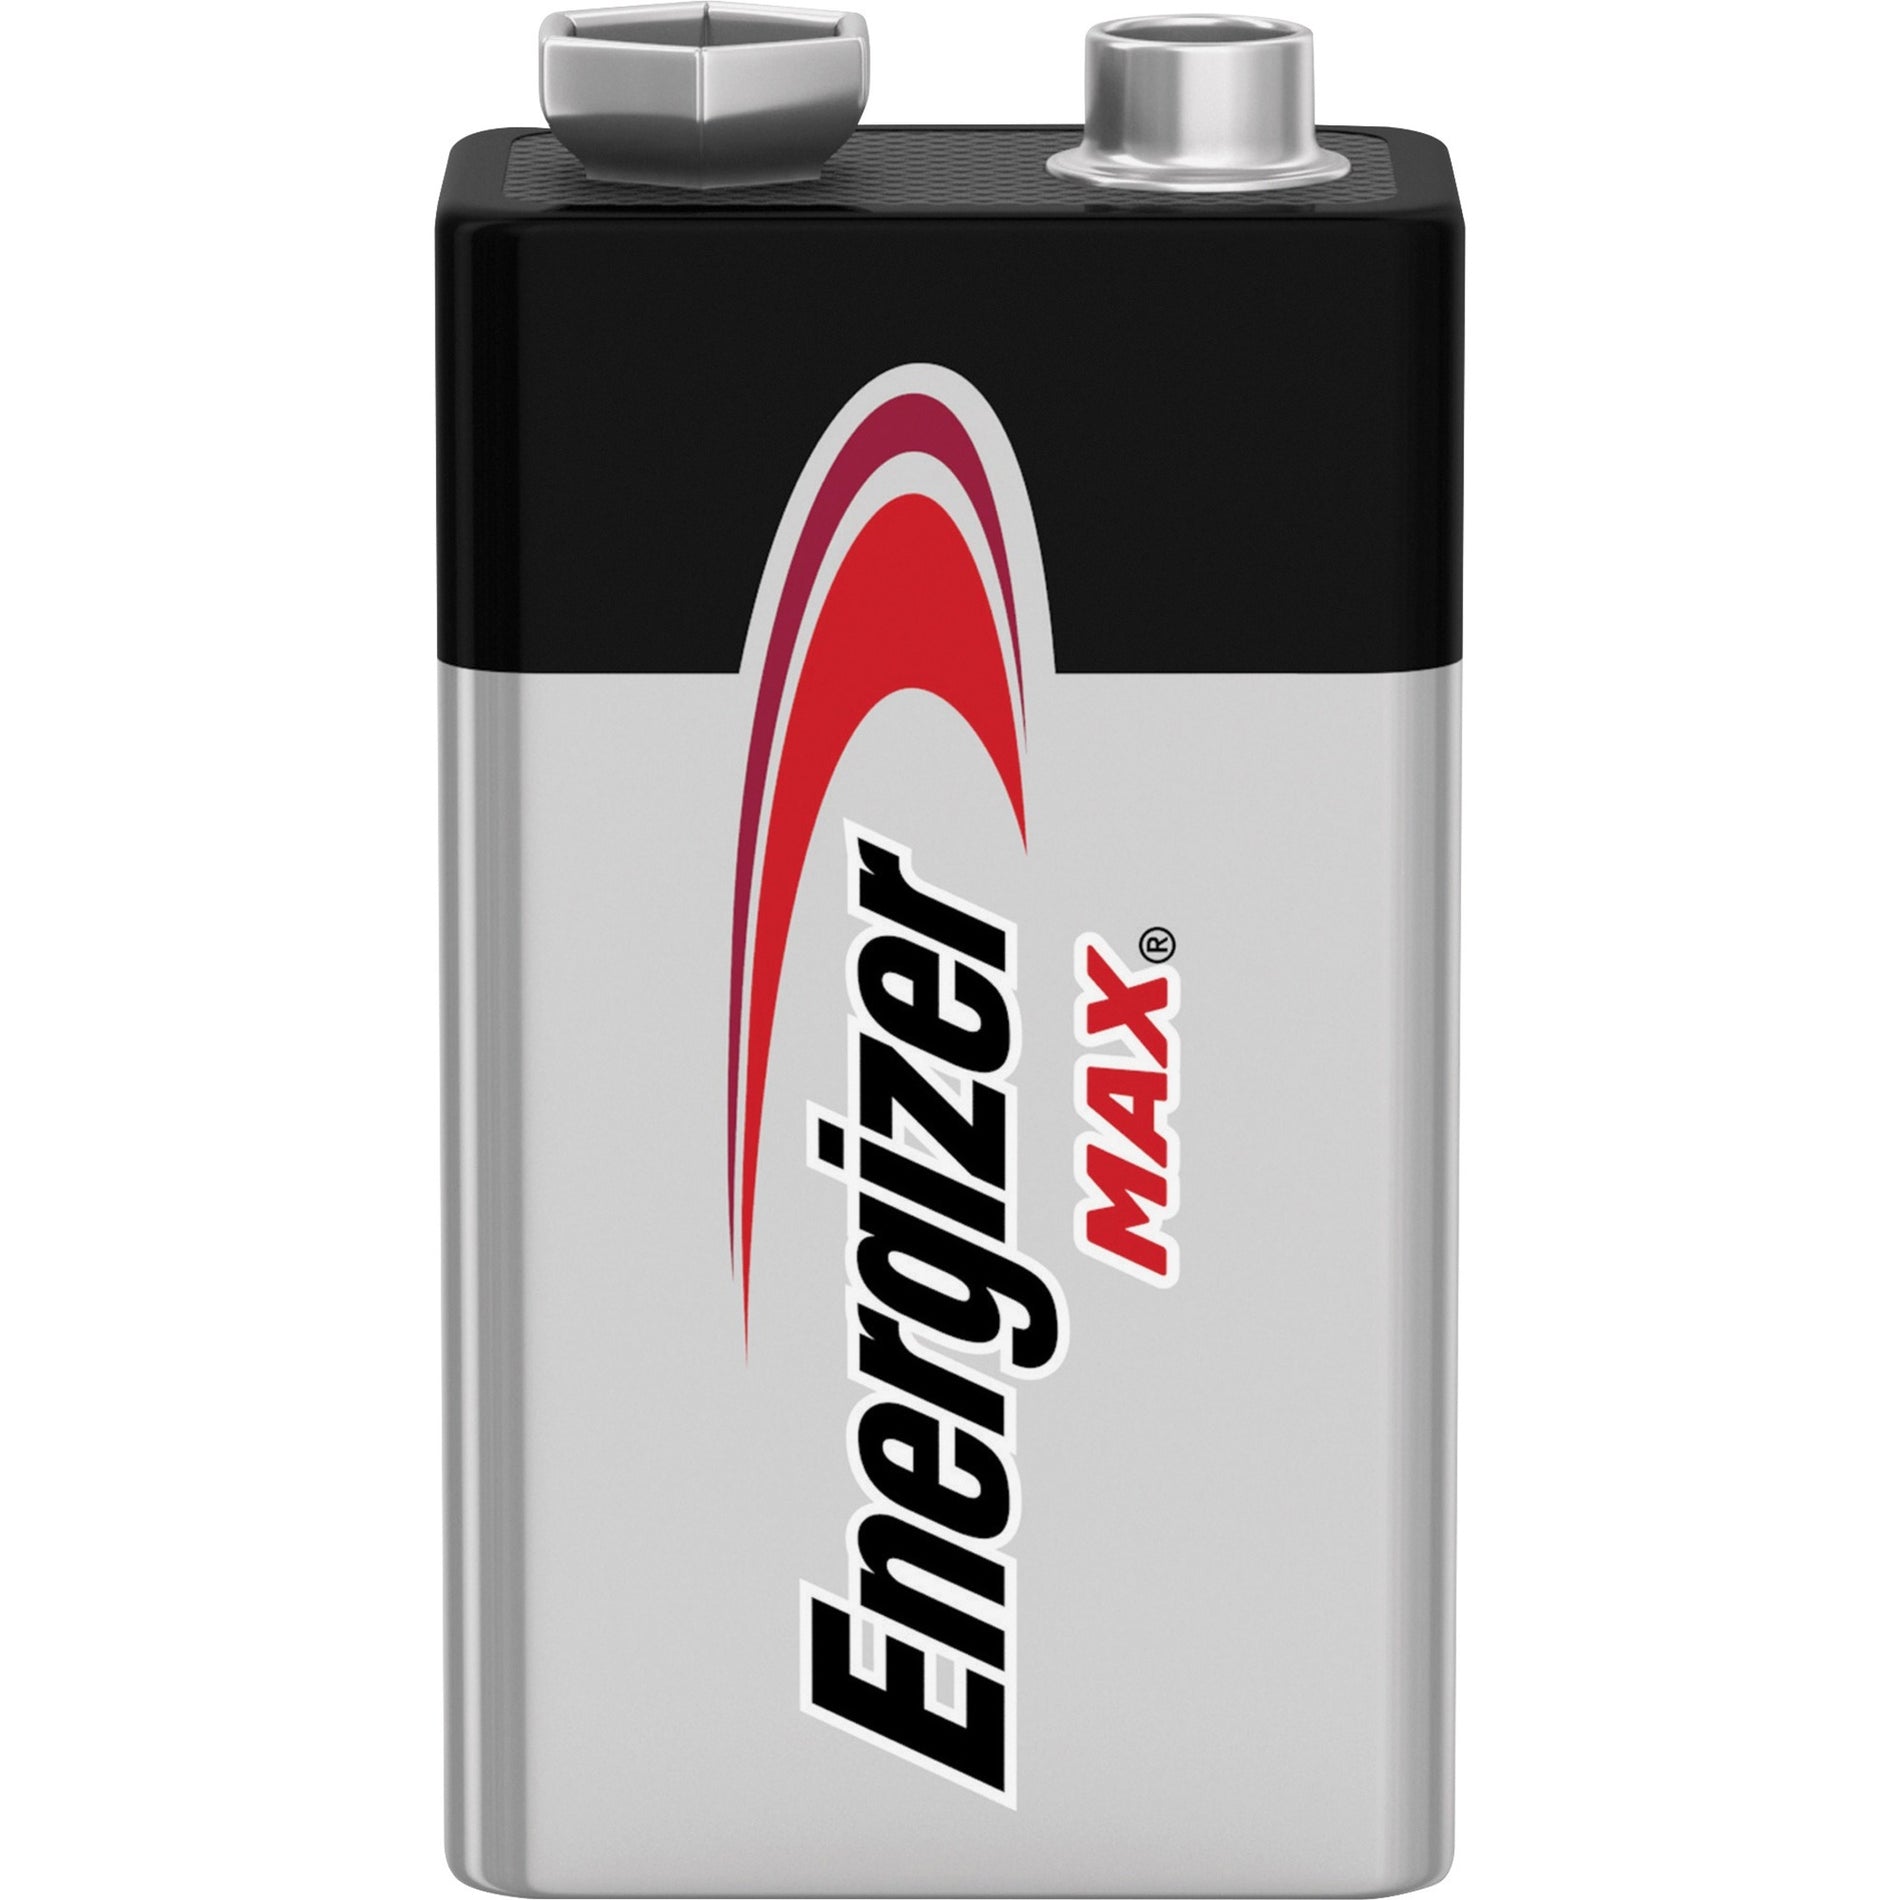 Energizer Alkaline Battery, 9 Volt, 2/PK (522BP-2)